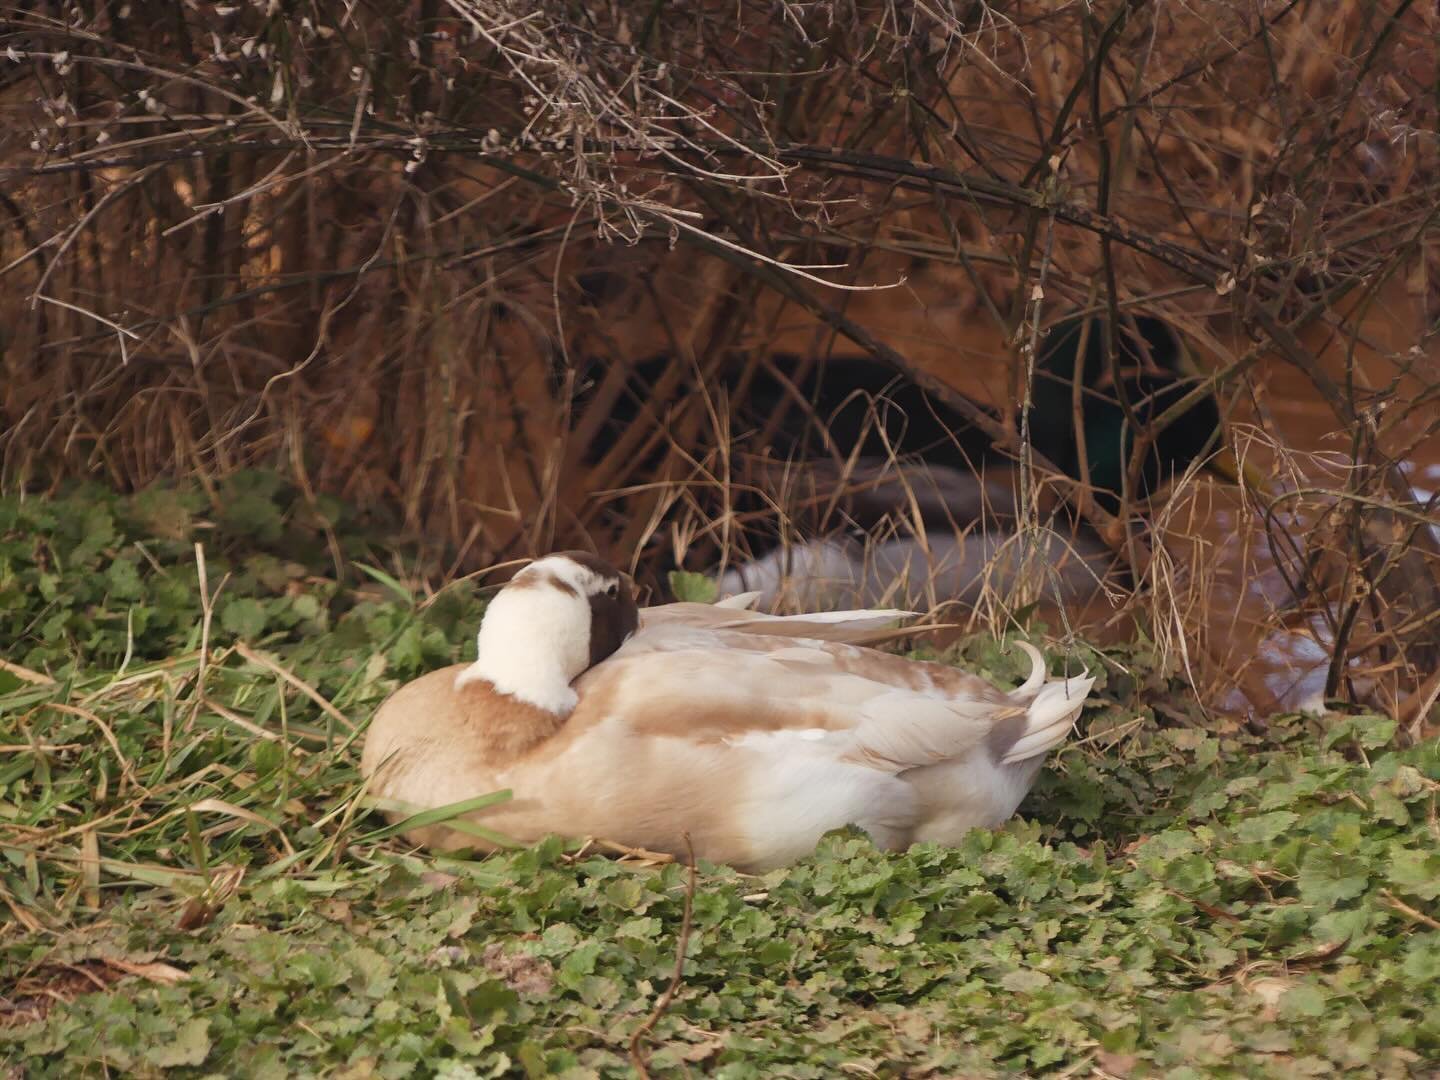 Sleepy spring days.

#ducks #sleepy #springtime